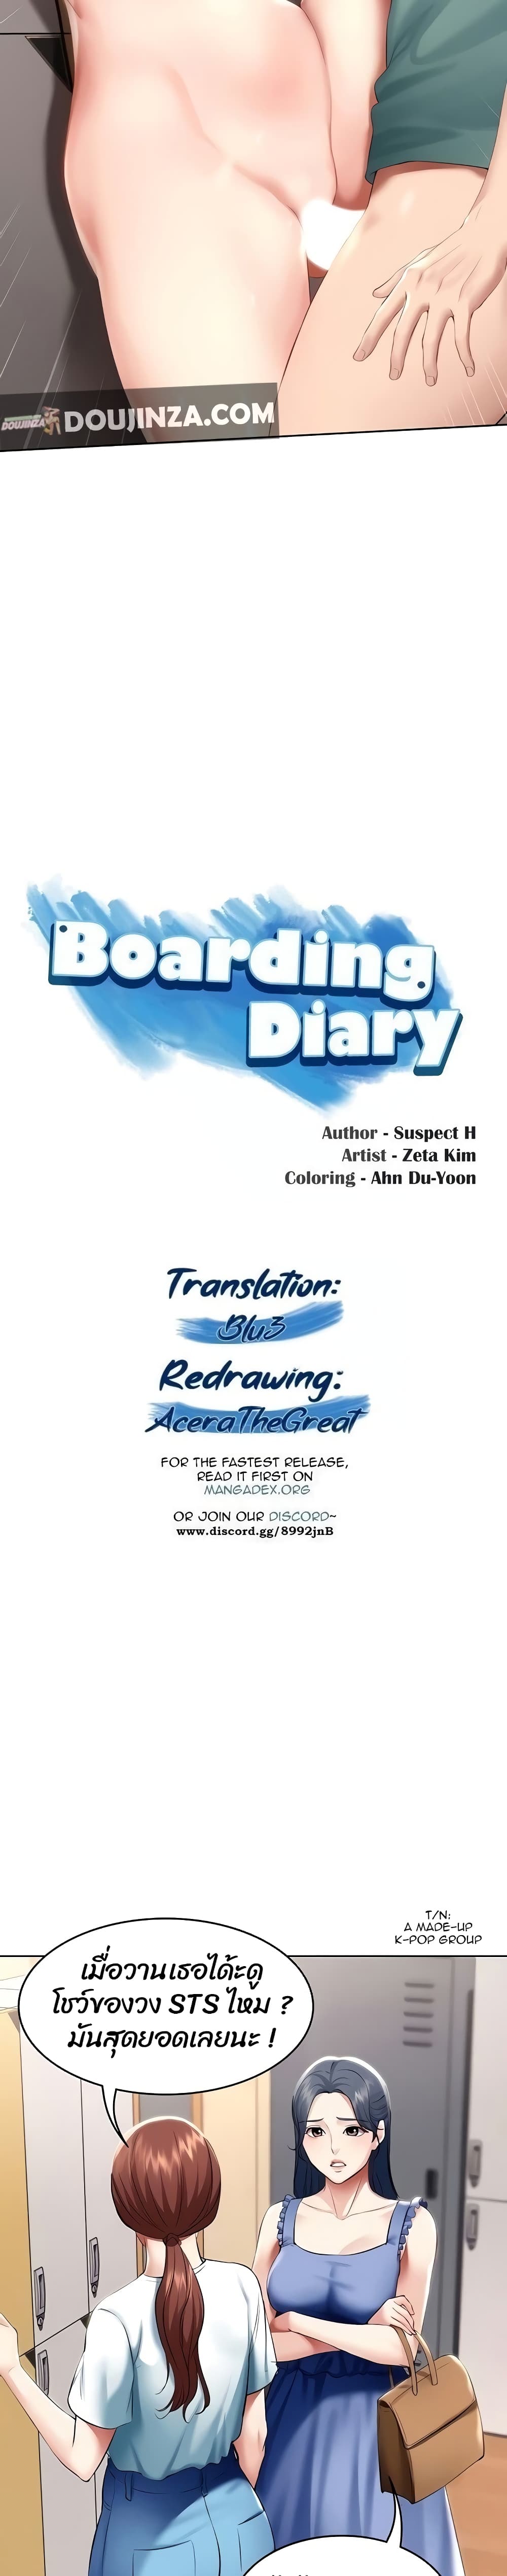 Boarding Diary 65-65